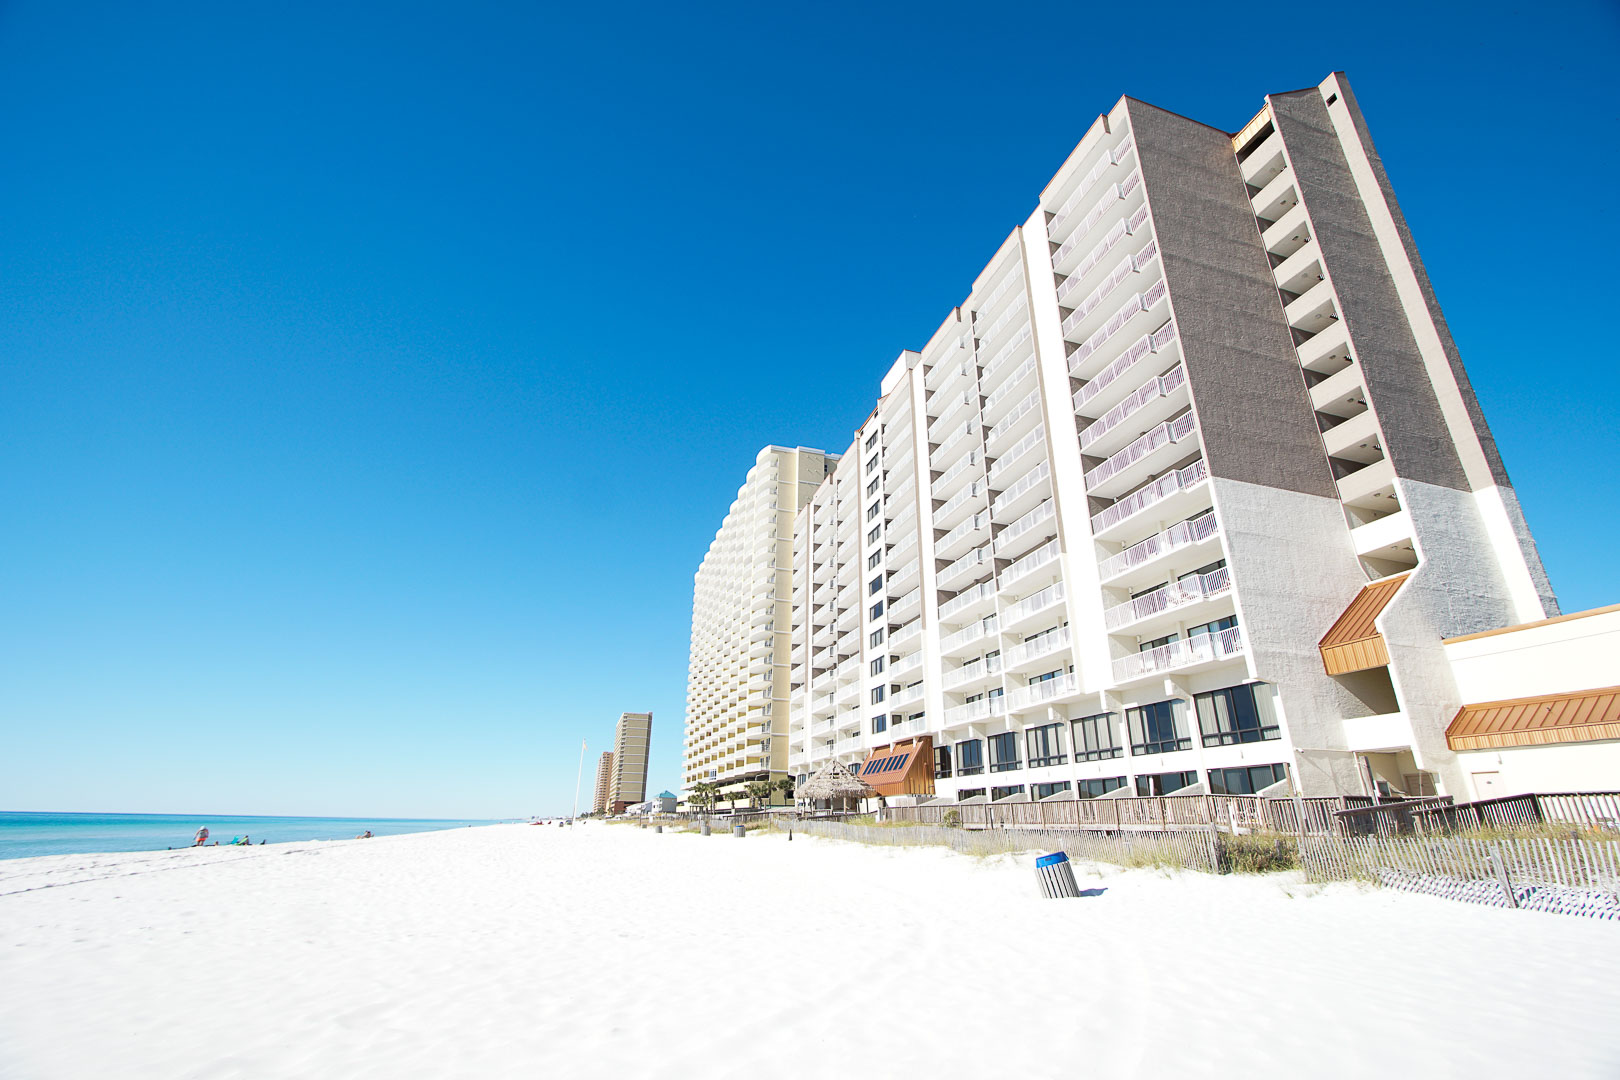 A scenic view from the beach of VRI's Landmark Holiday Beach Resort in Panama City, Florida.